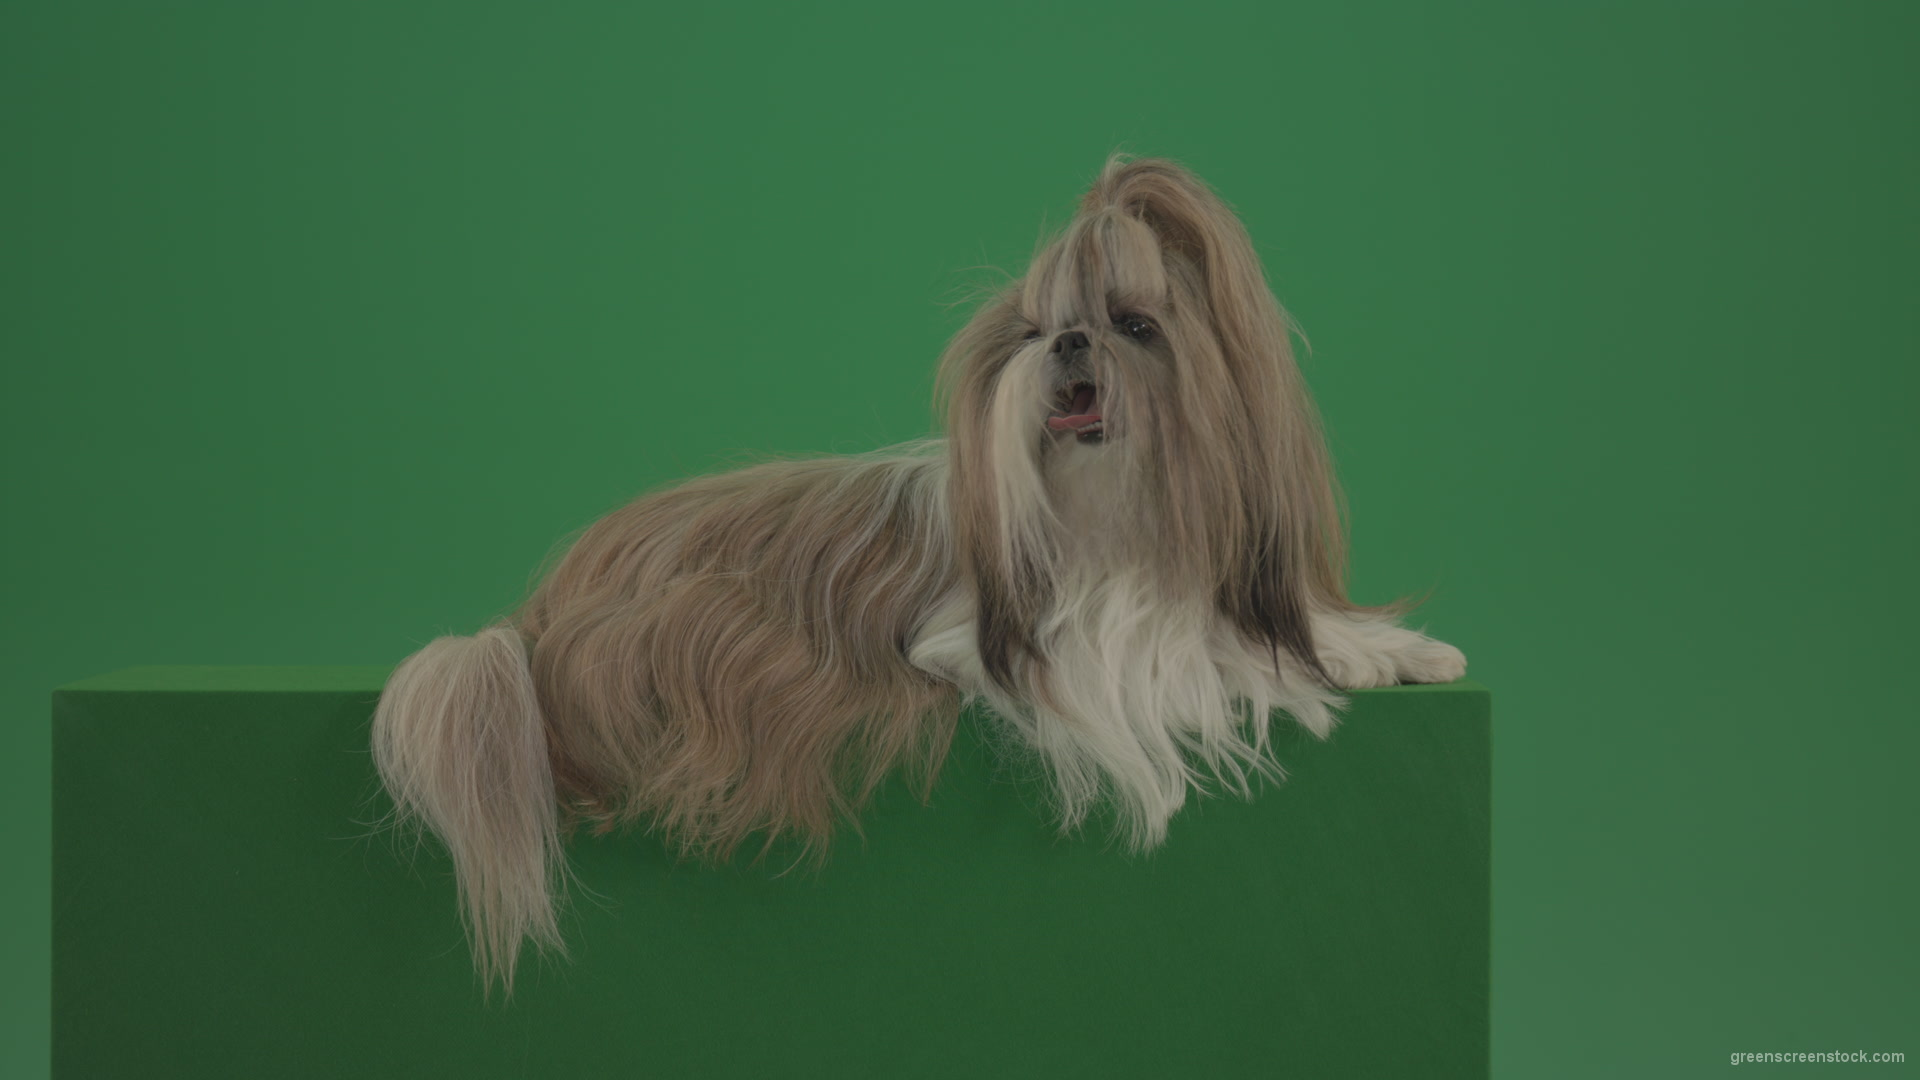 Luxury-bright-hair-Shihtzu-dog-pet-relaxing-on-green-screen-4K_005 Green Screen Stock